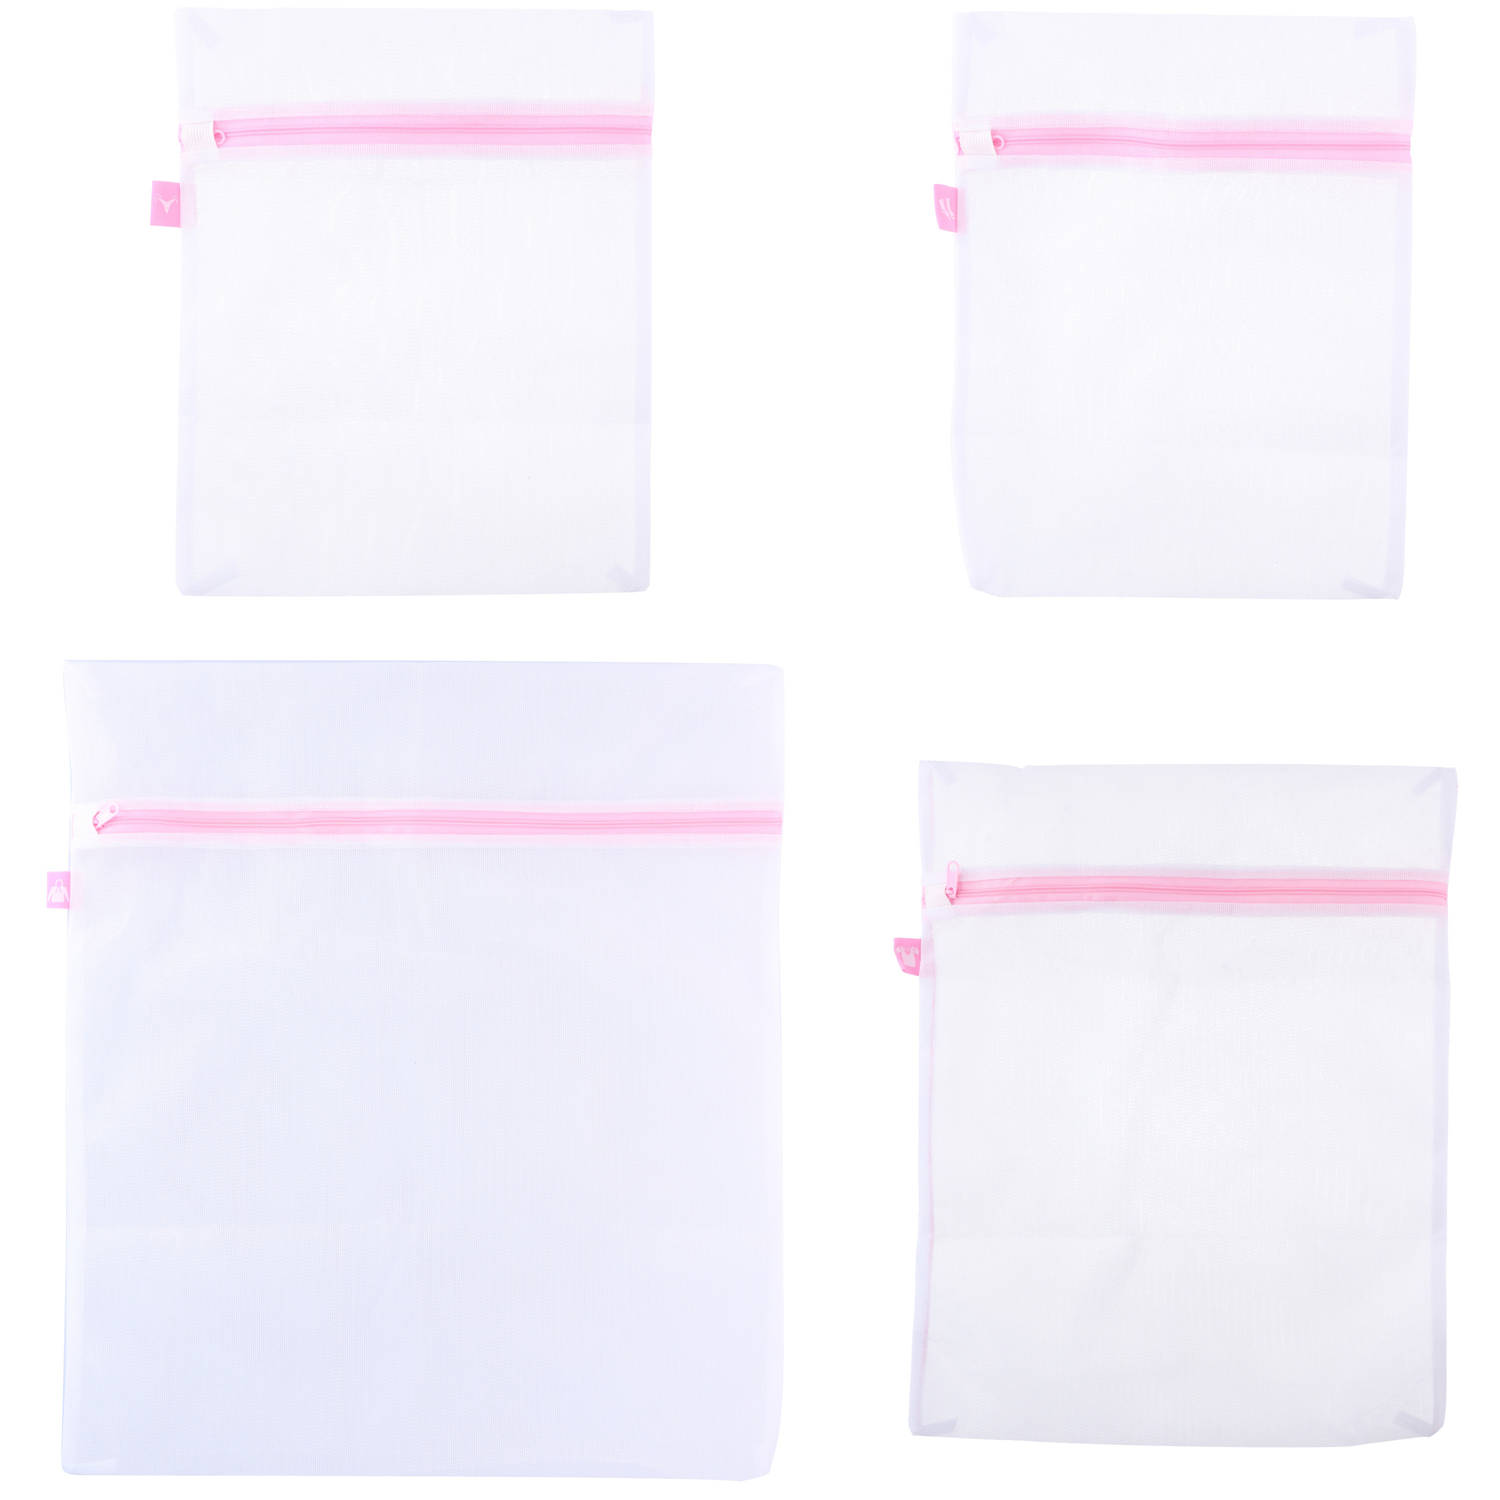 Set van 4x stuks waszakjes - wit/roze - 3 formaten - Waszakken